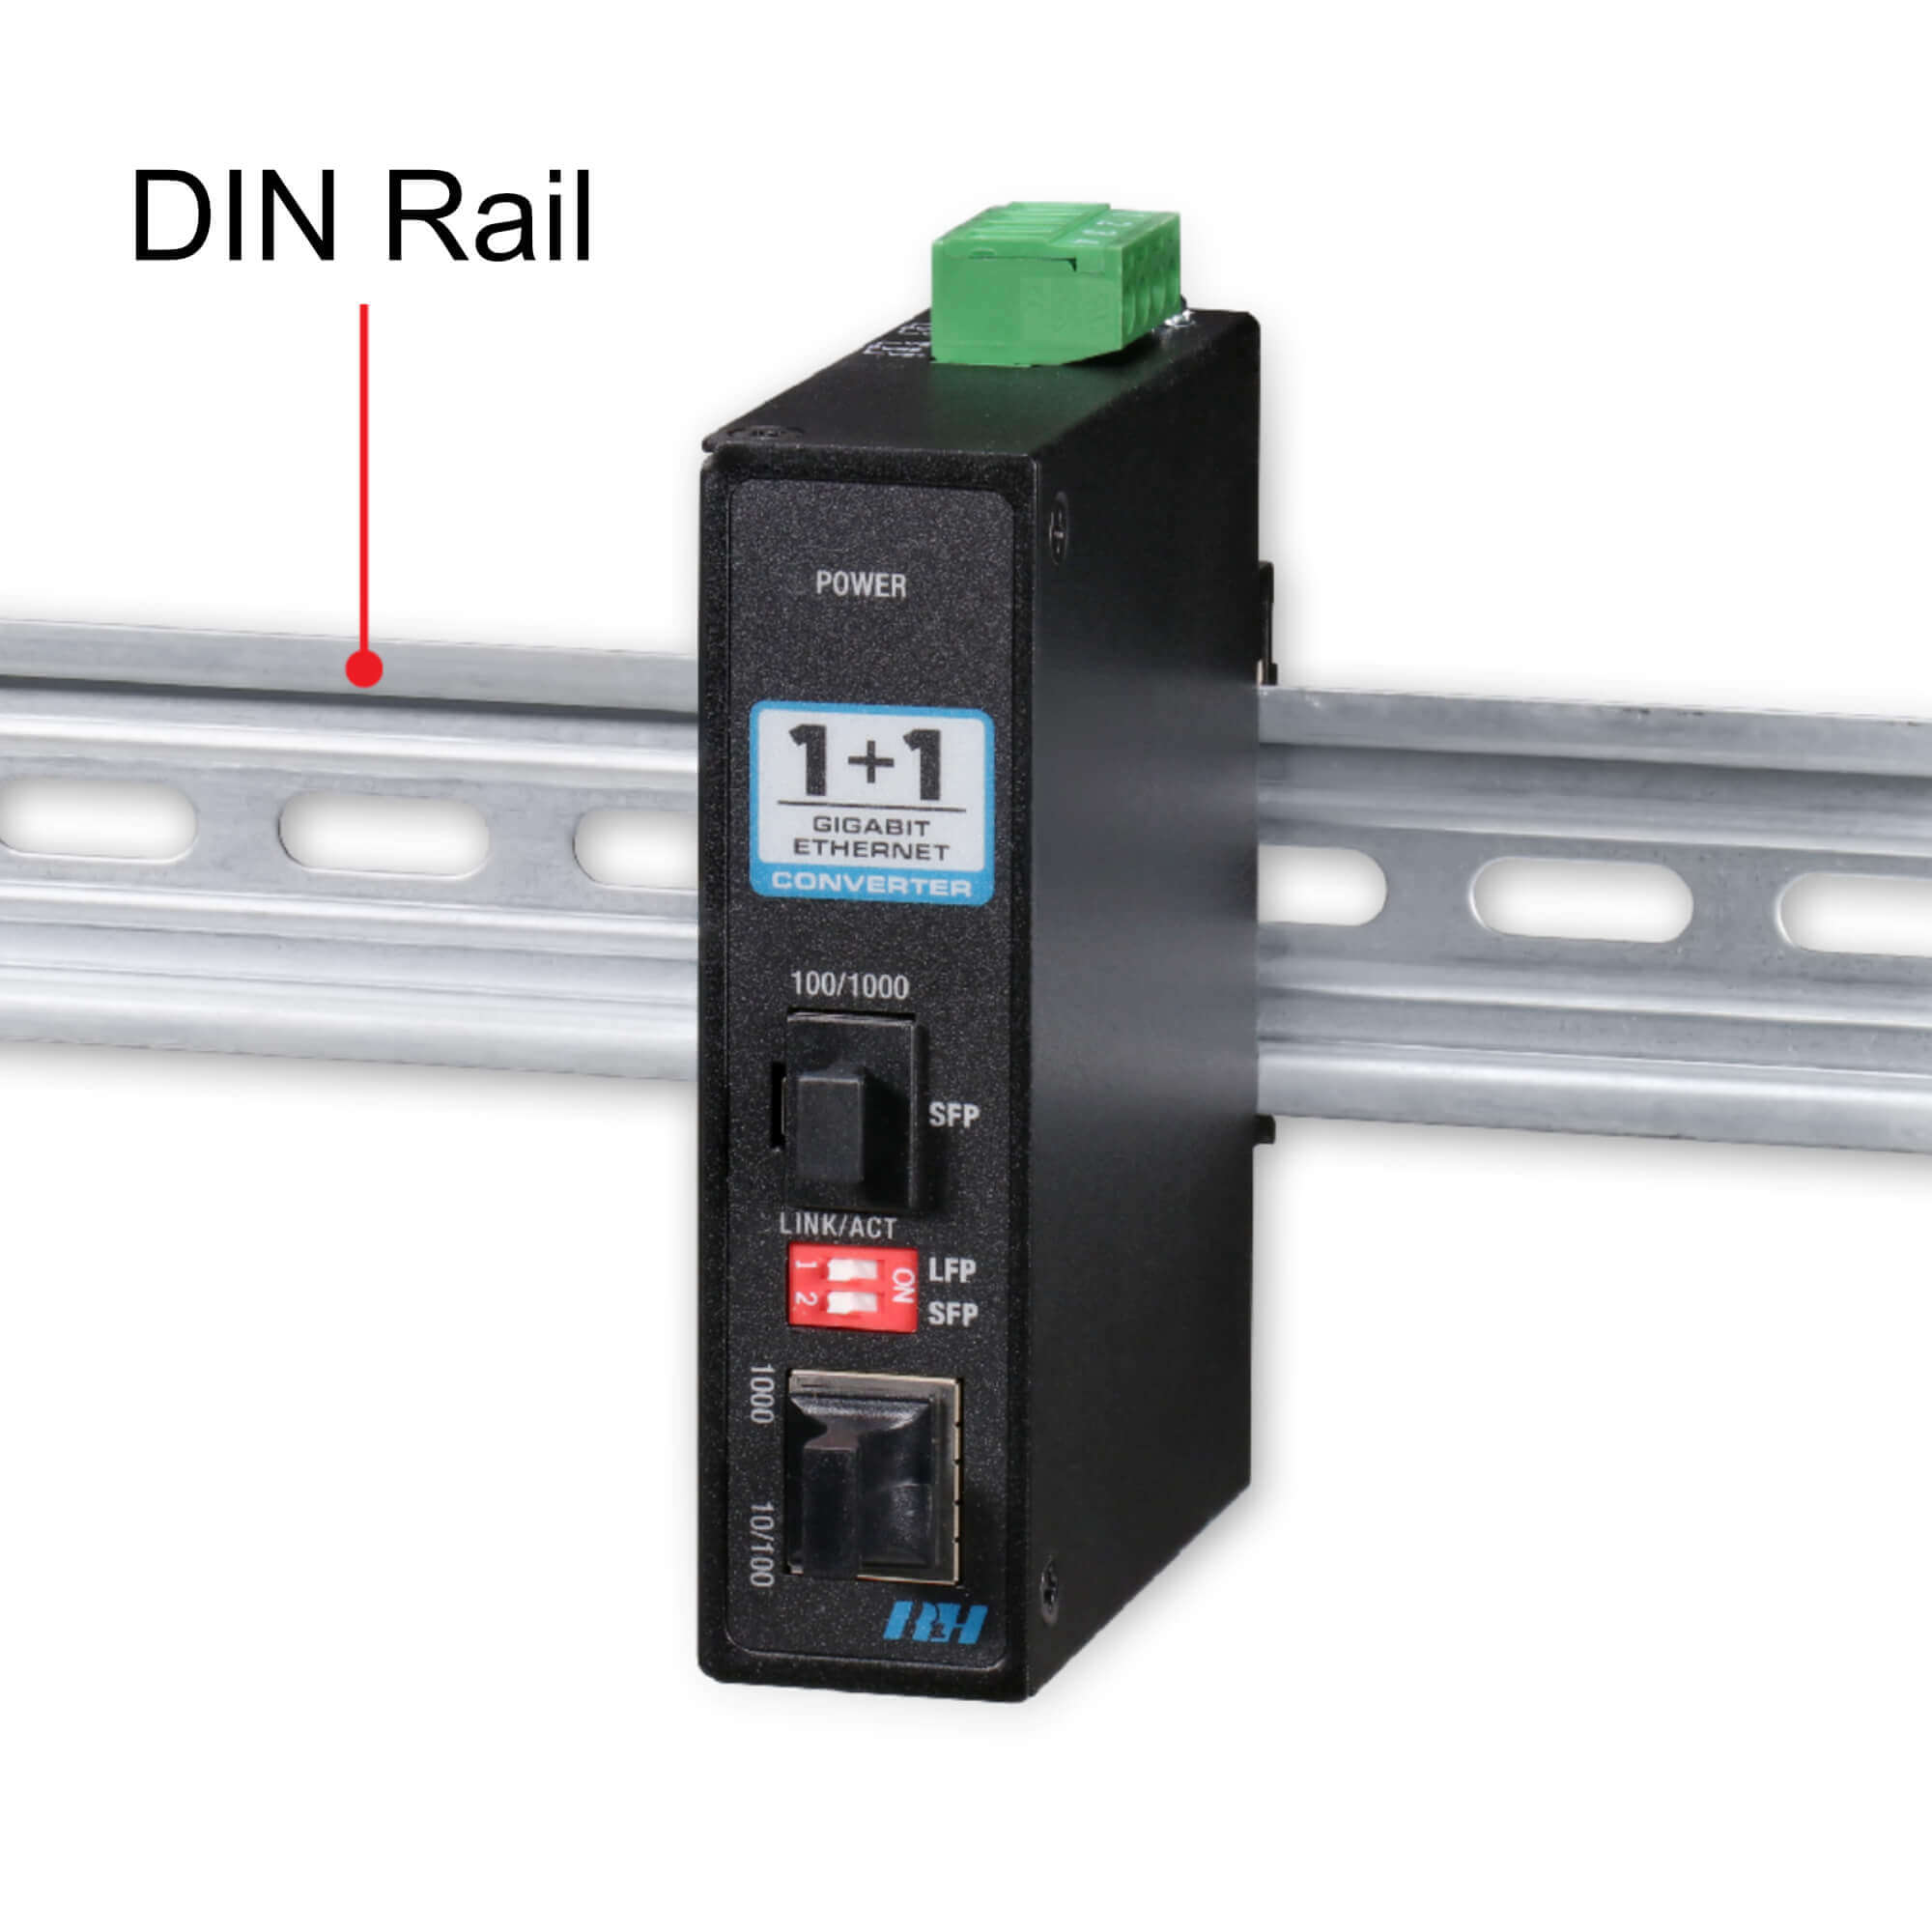 DIN Rail Mounted Fiber Optic Converter